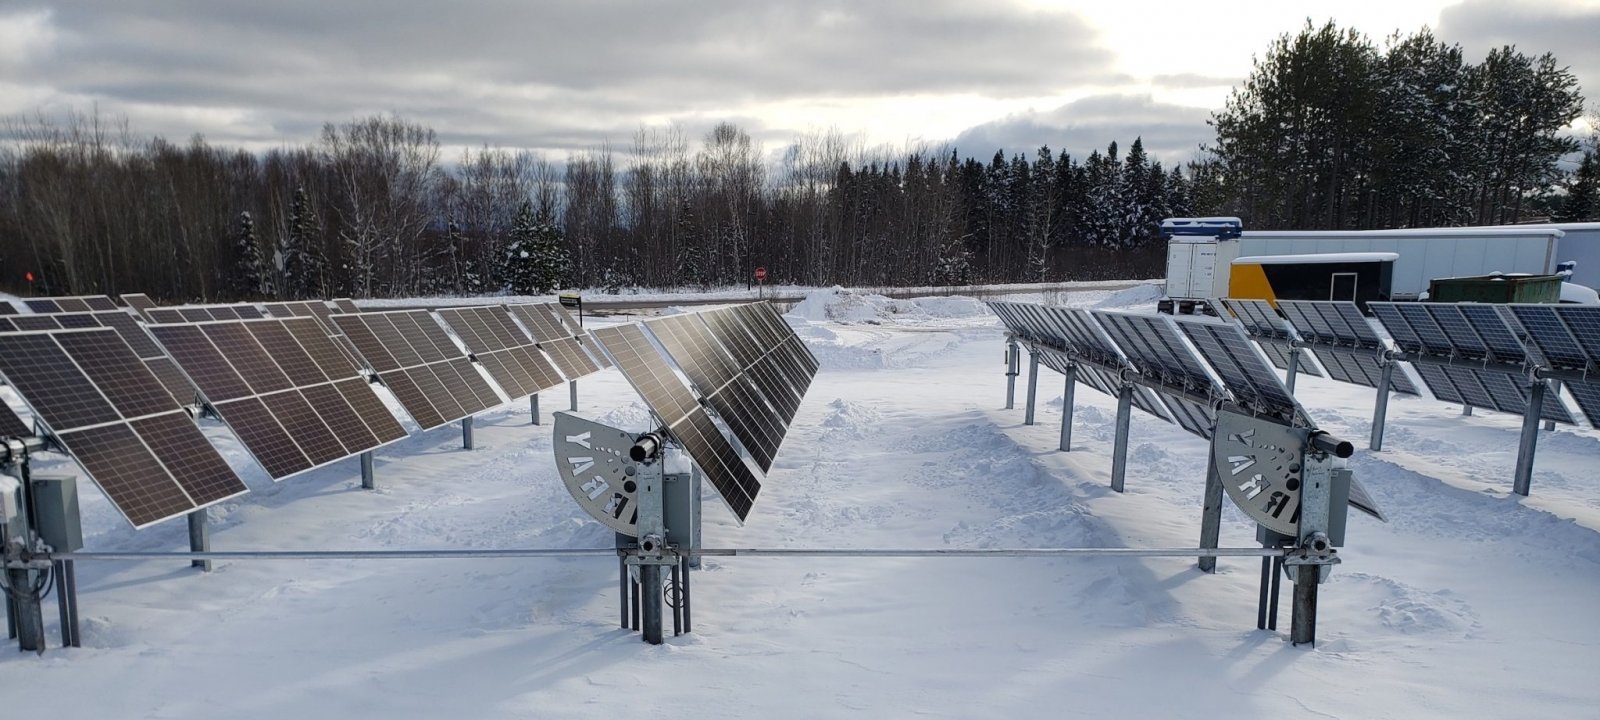 Array of solar panels in winter.